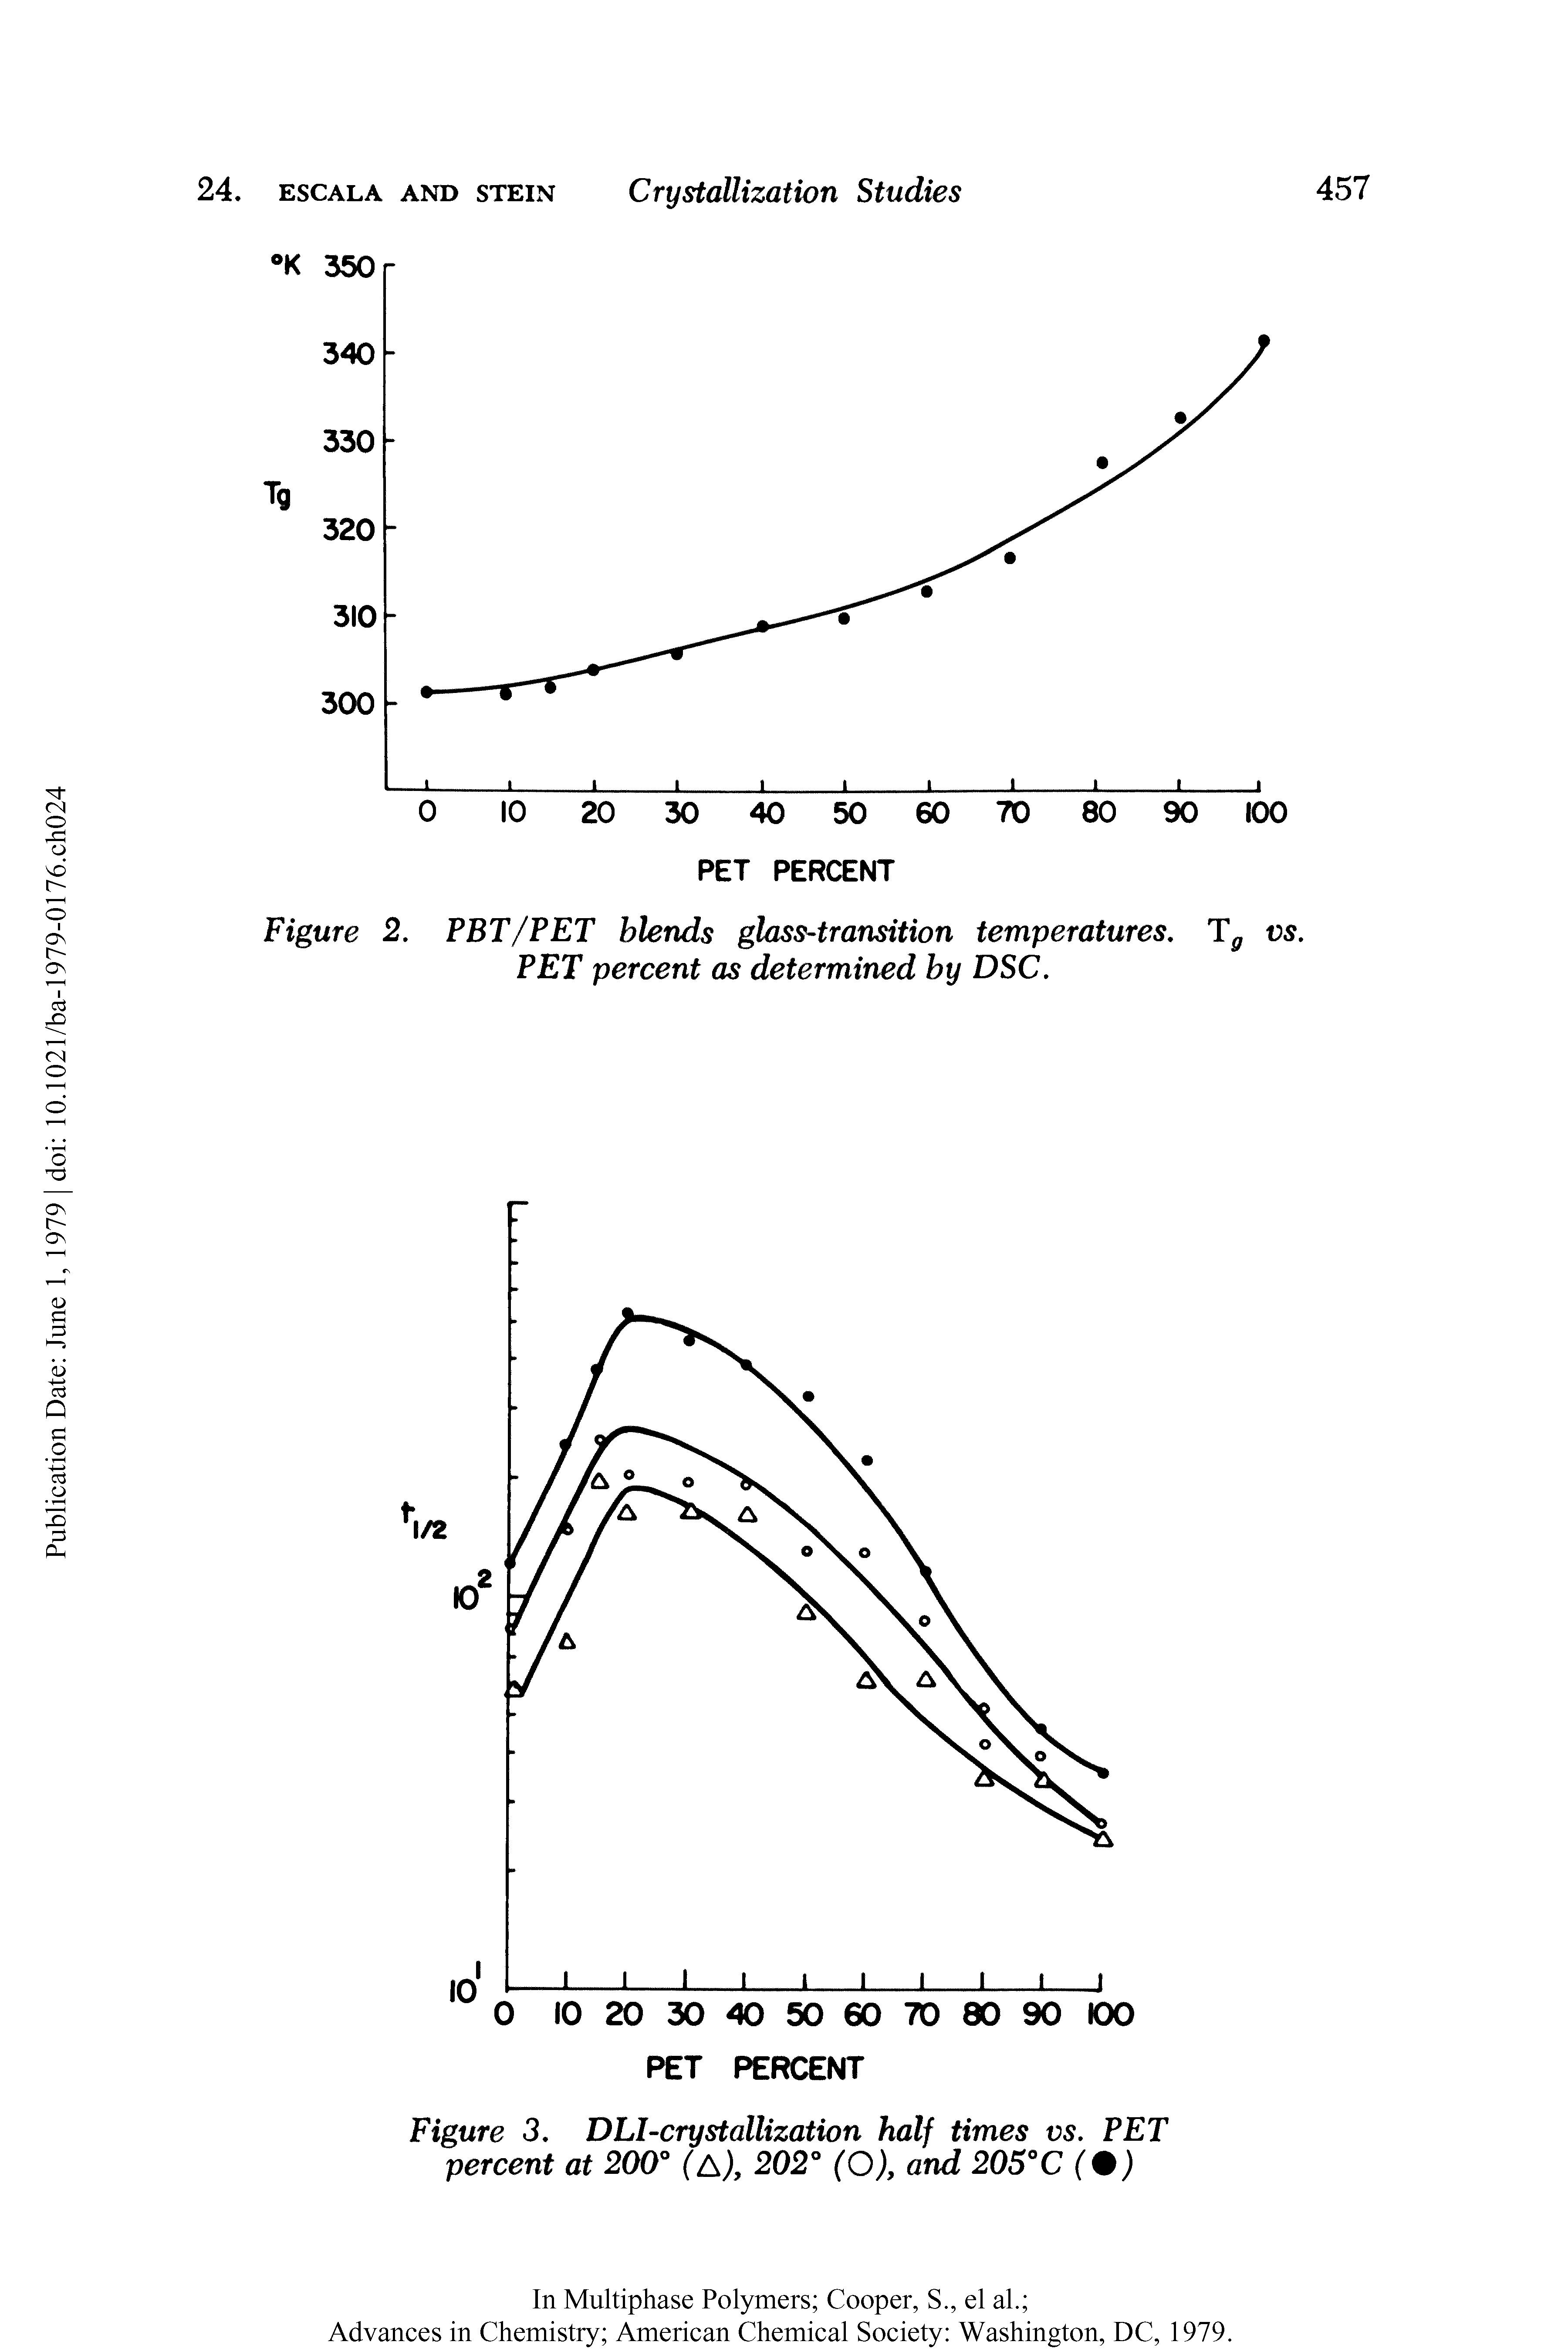 Figure 2. PBT/PET blends glass-transition temperatures, Tg vs. PET percent as determined by DSC.